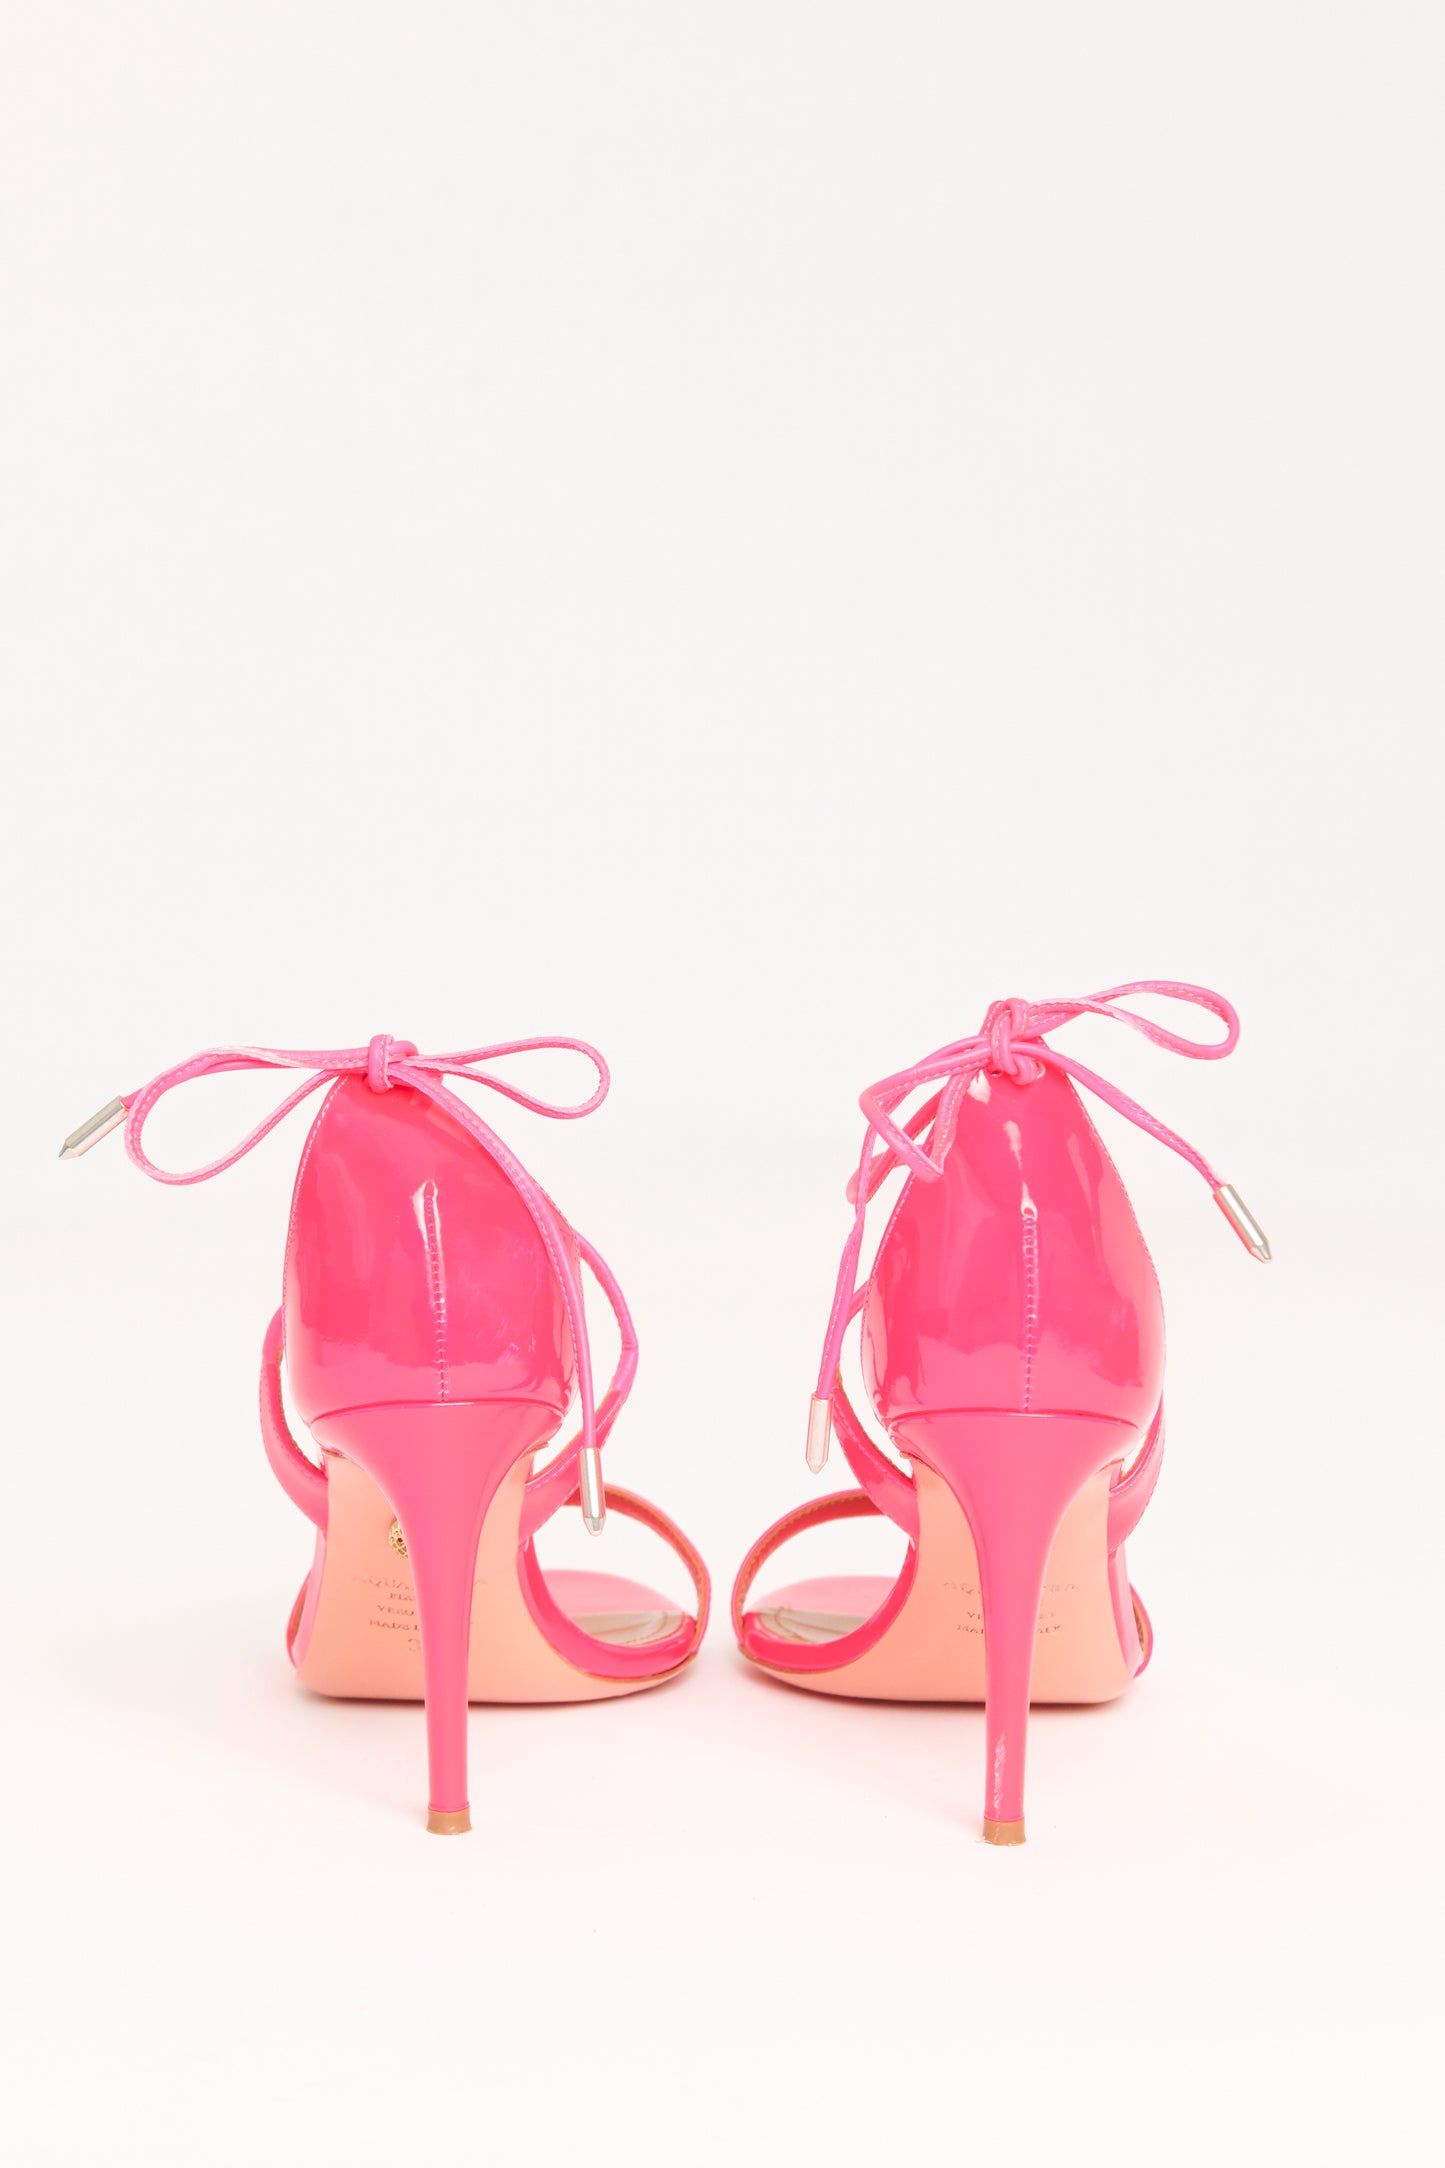 Flouro Pink Patent Linda 85 Preowned Heels